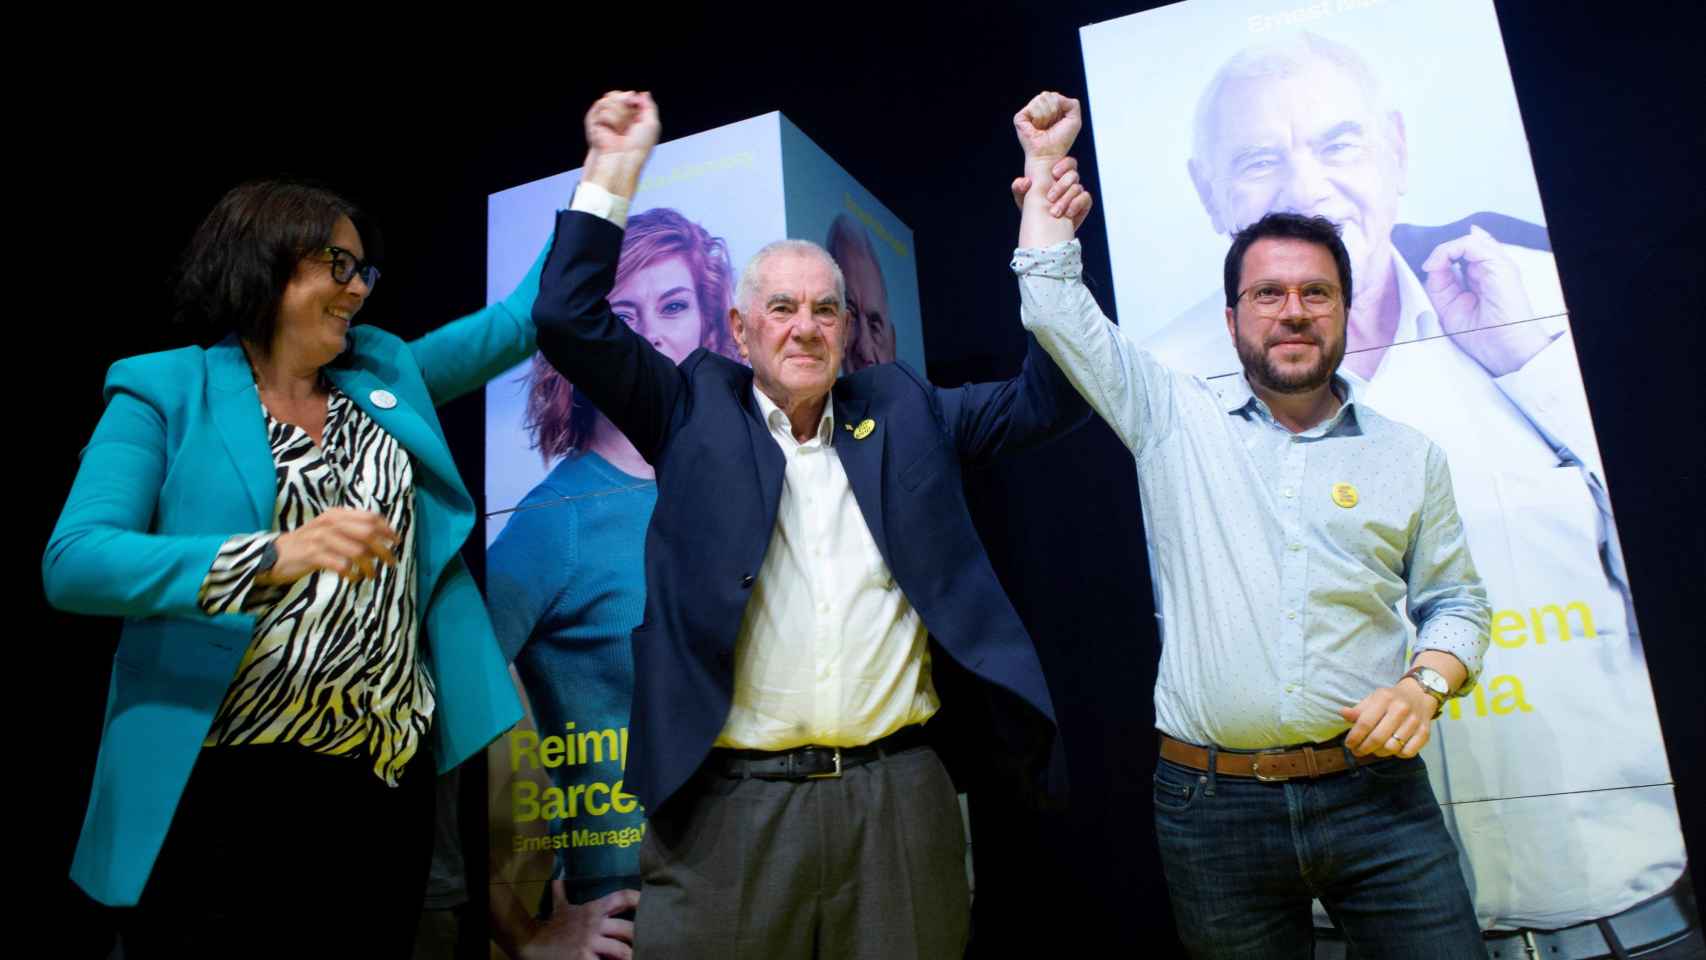 Ernest Maragall celebra la noche electoral, tras el triunfo de Esquerra Republicana en Barcelona / EFE